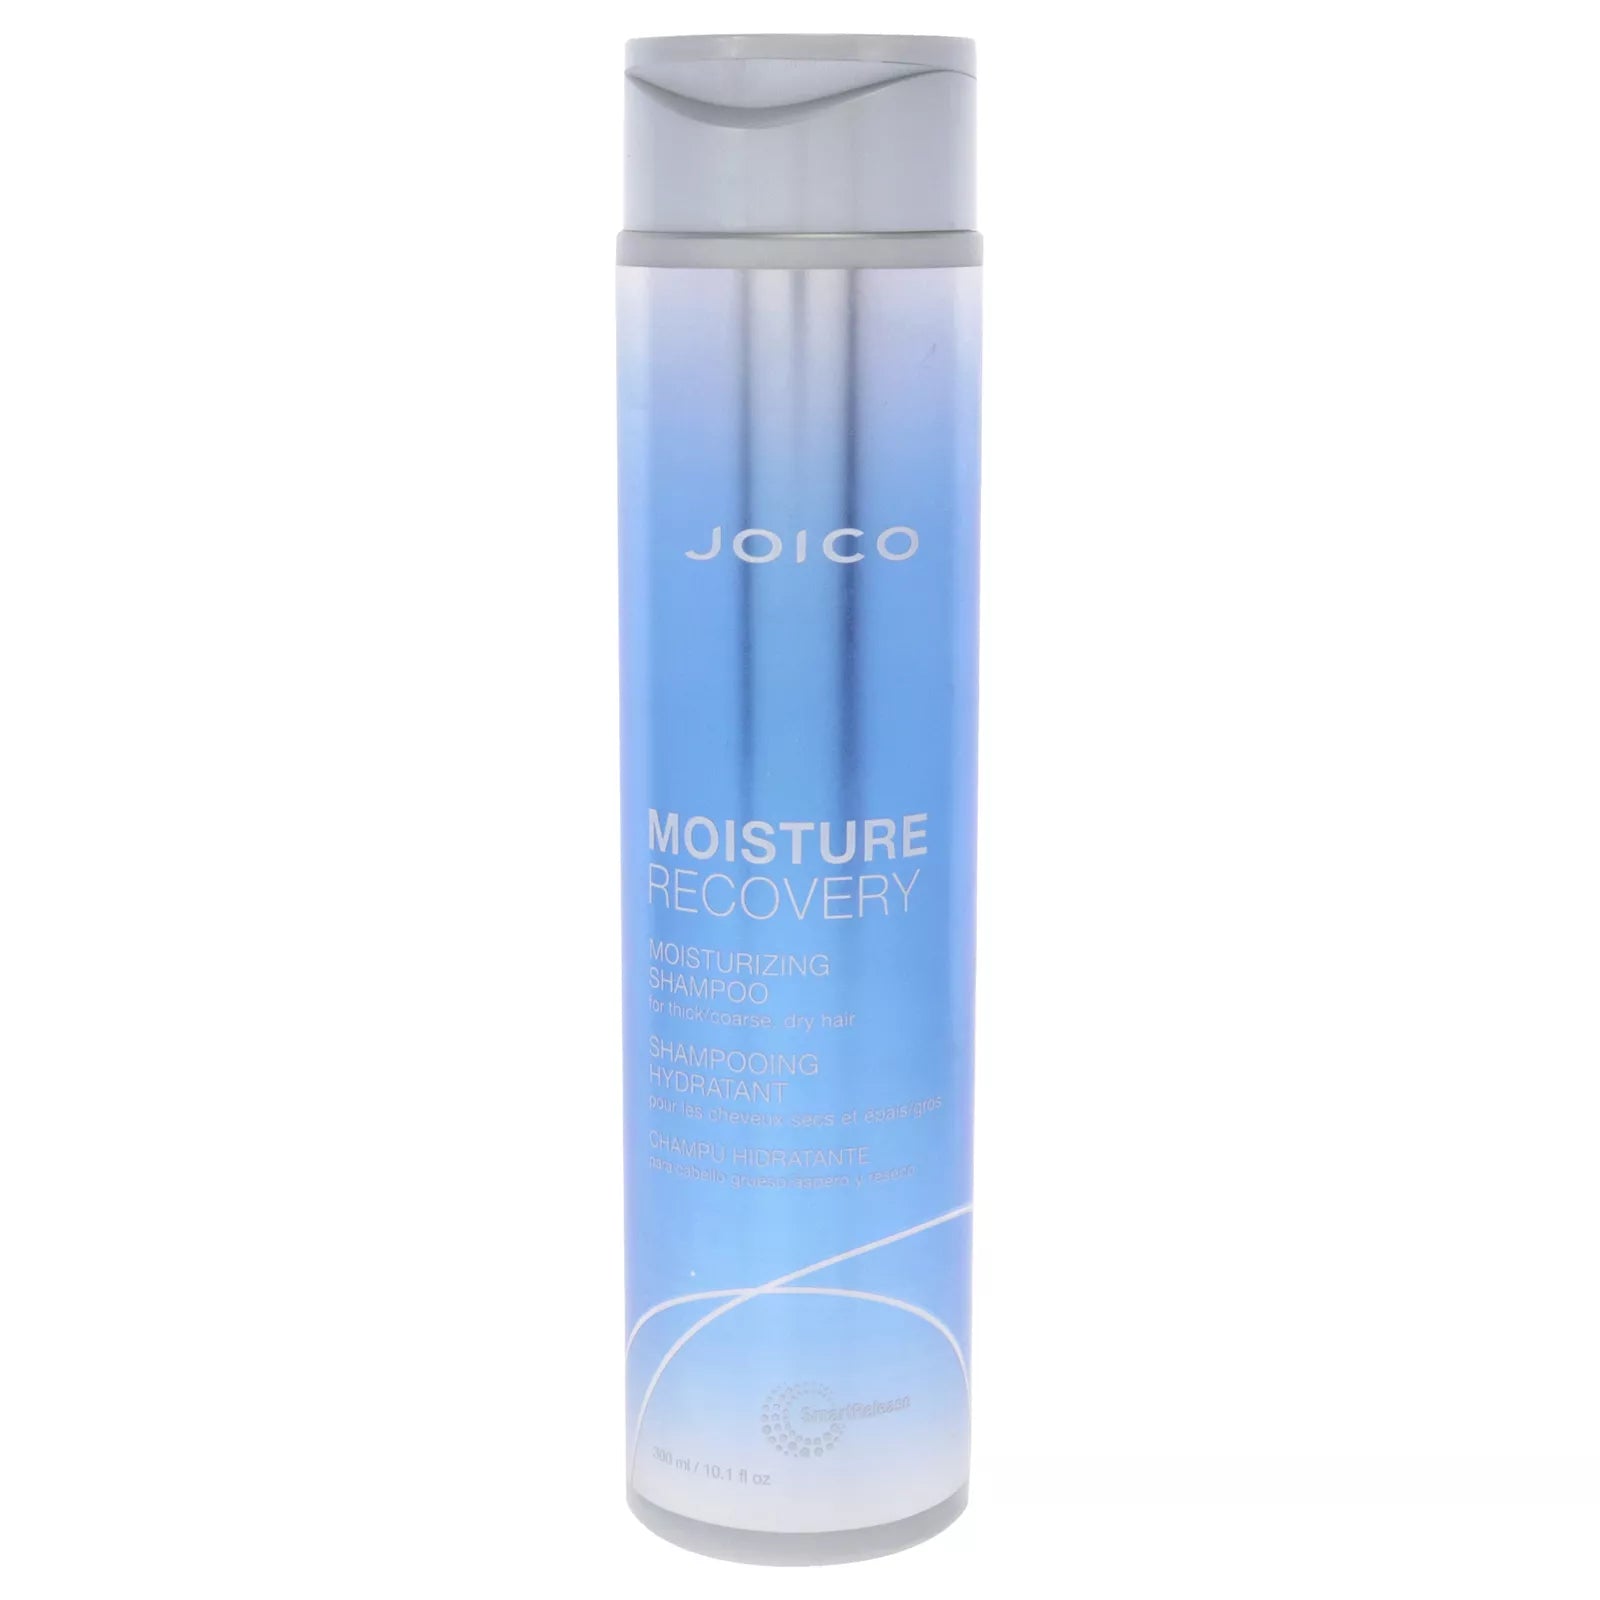 Joico Moisture Recovery Shampoo for dry hair